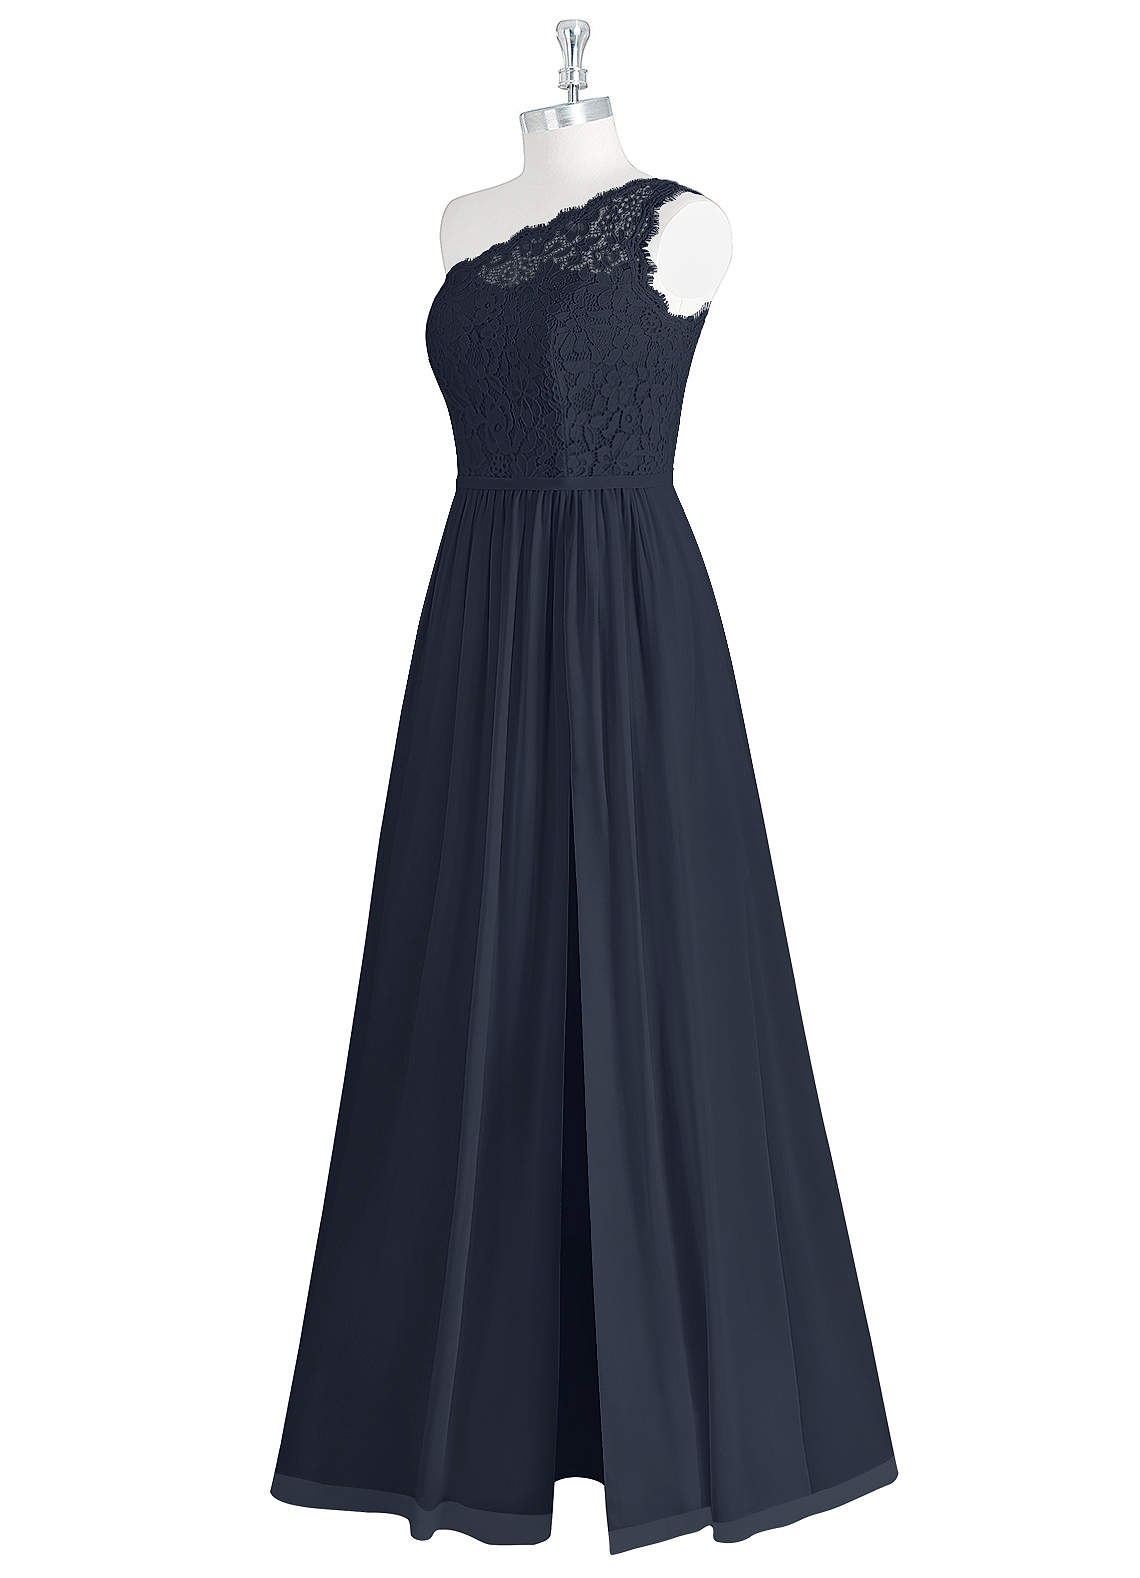 Azazie Demi Bridesmaid Dresses A-Line One Shoulder Chiffon Floor-Length Dress image1